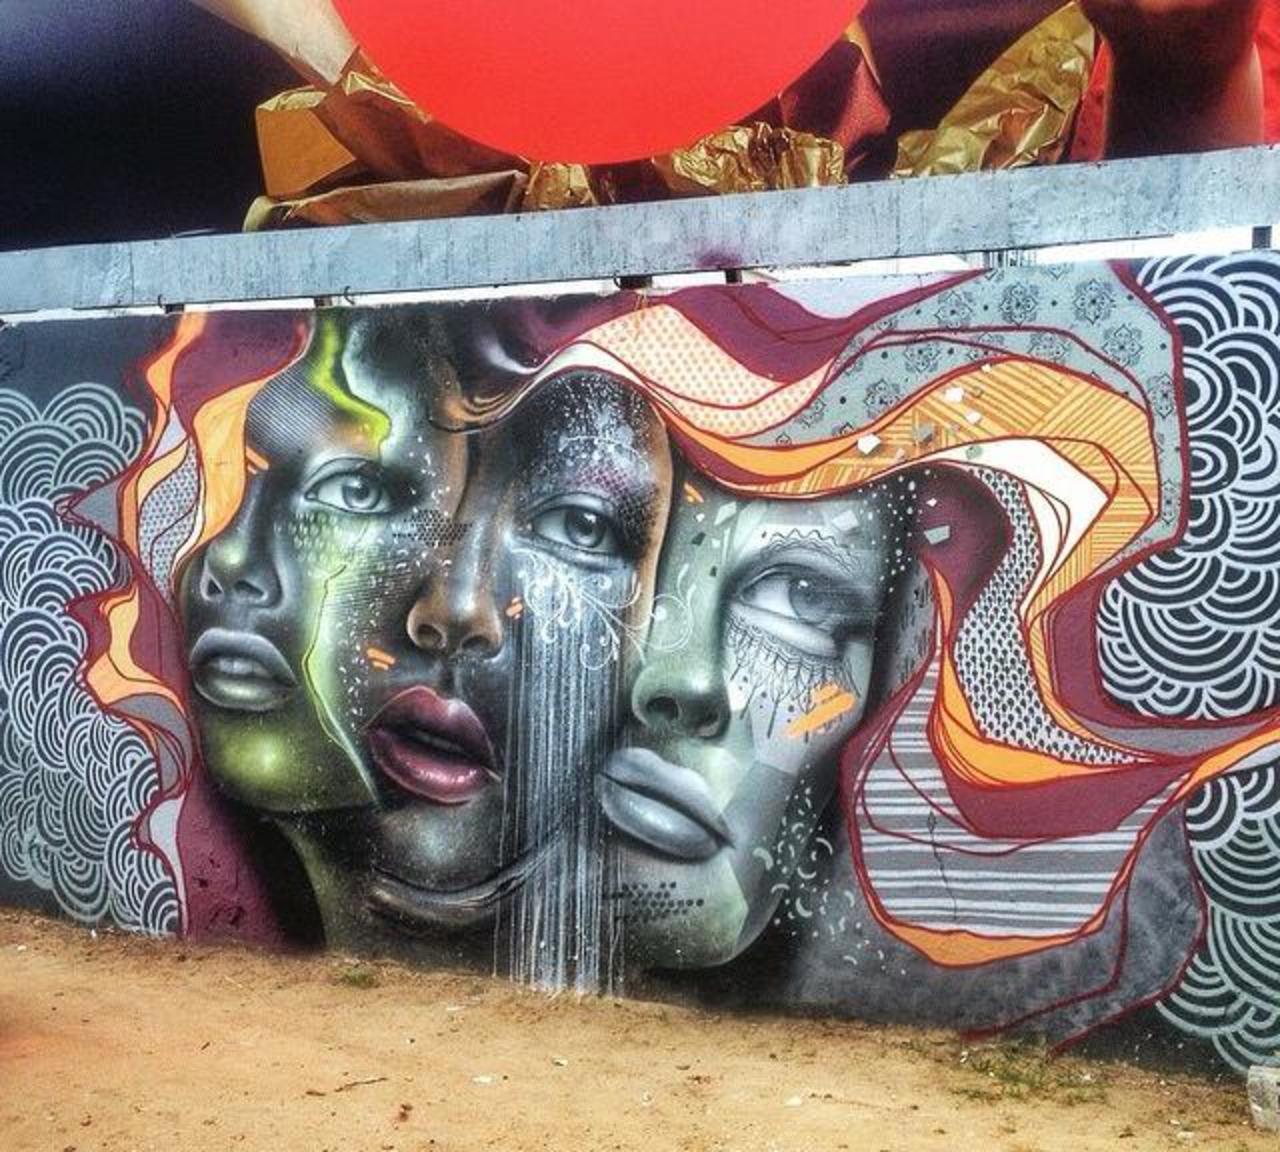 "@GoogleStreetArt: Amazing Street Art by AQI Luciano in Maceió, Brazil 
#art #arte #graffiti #streetart http://t.co/JKbdanhUH8"